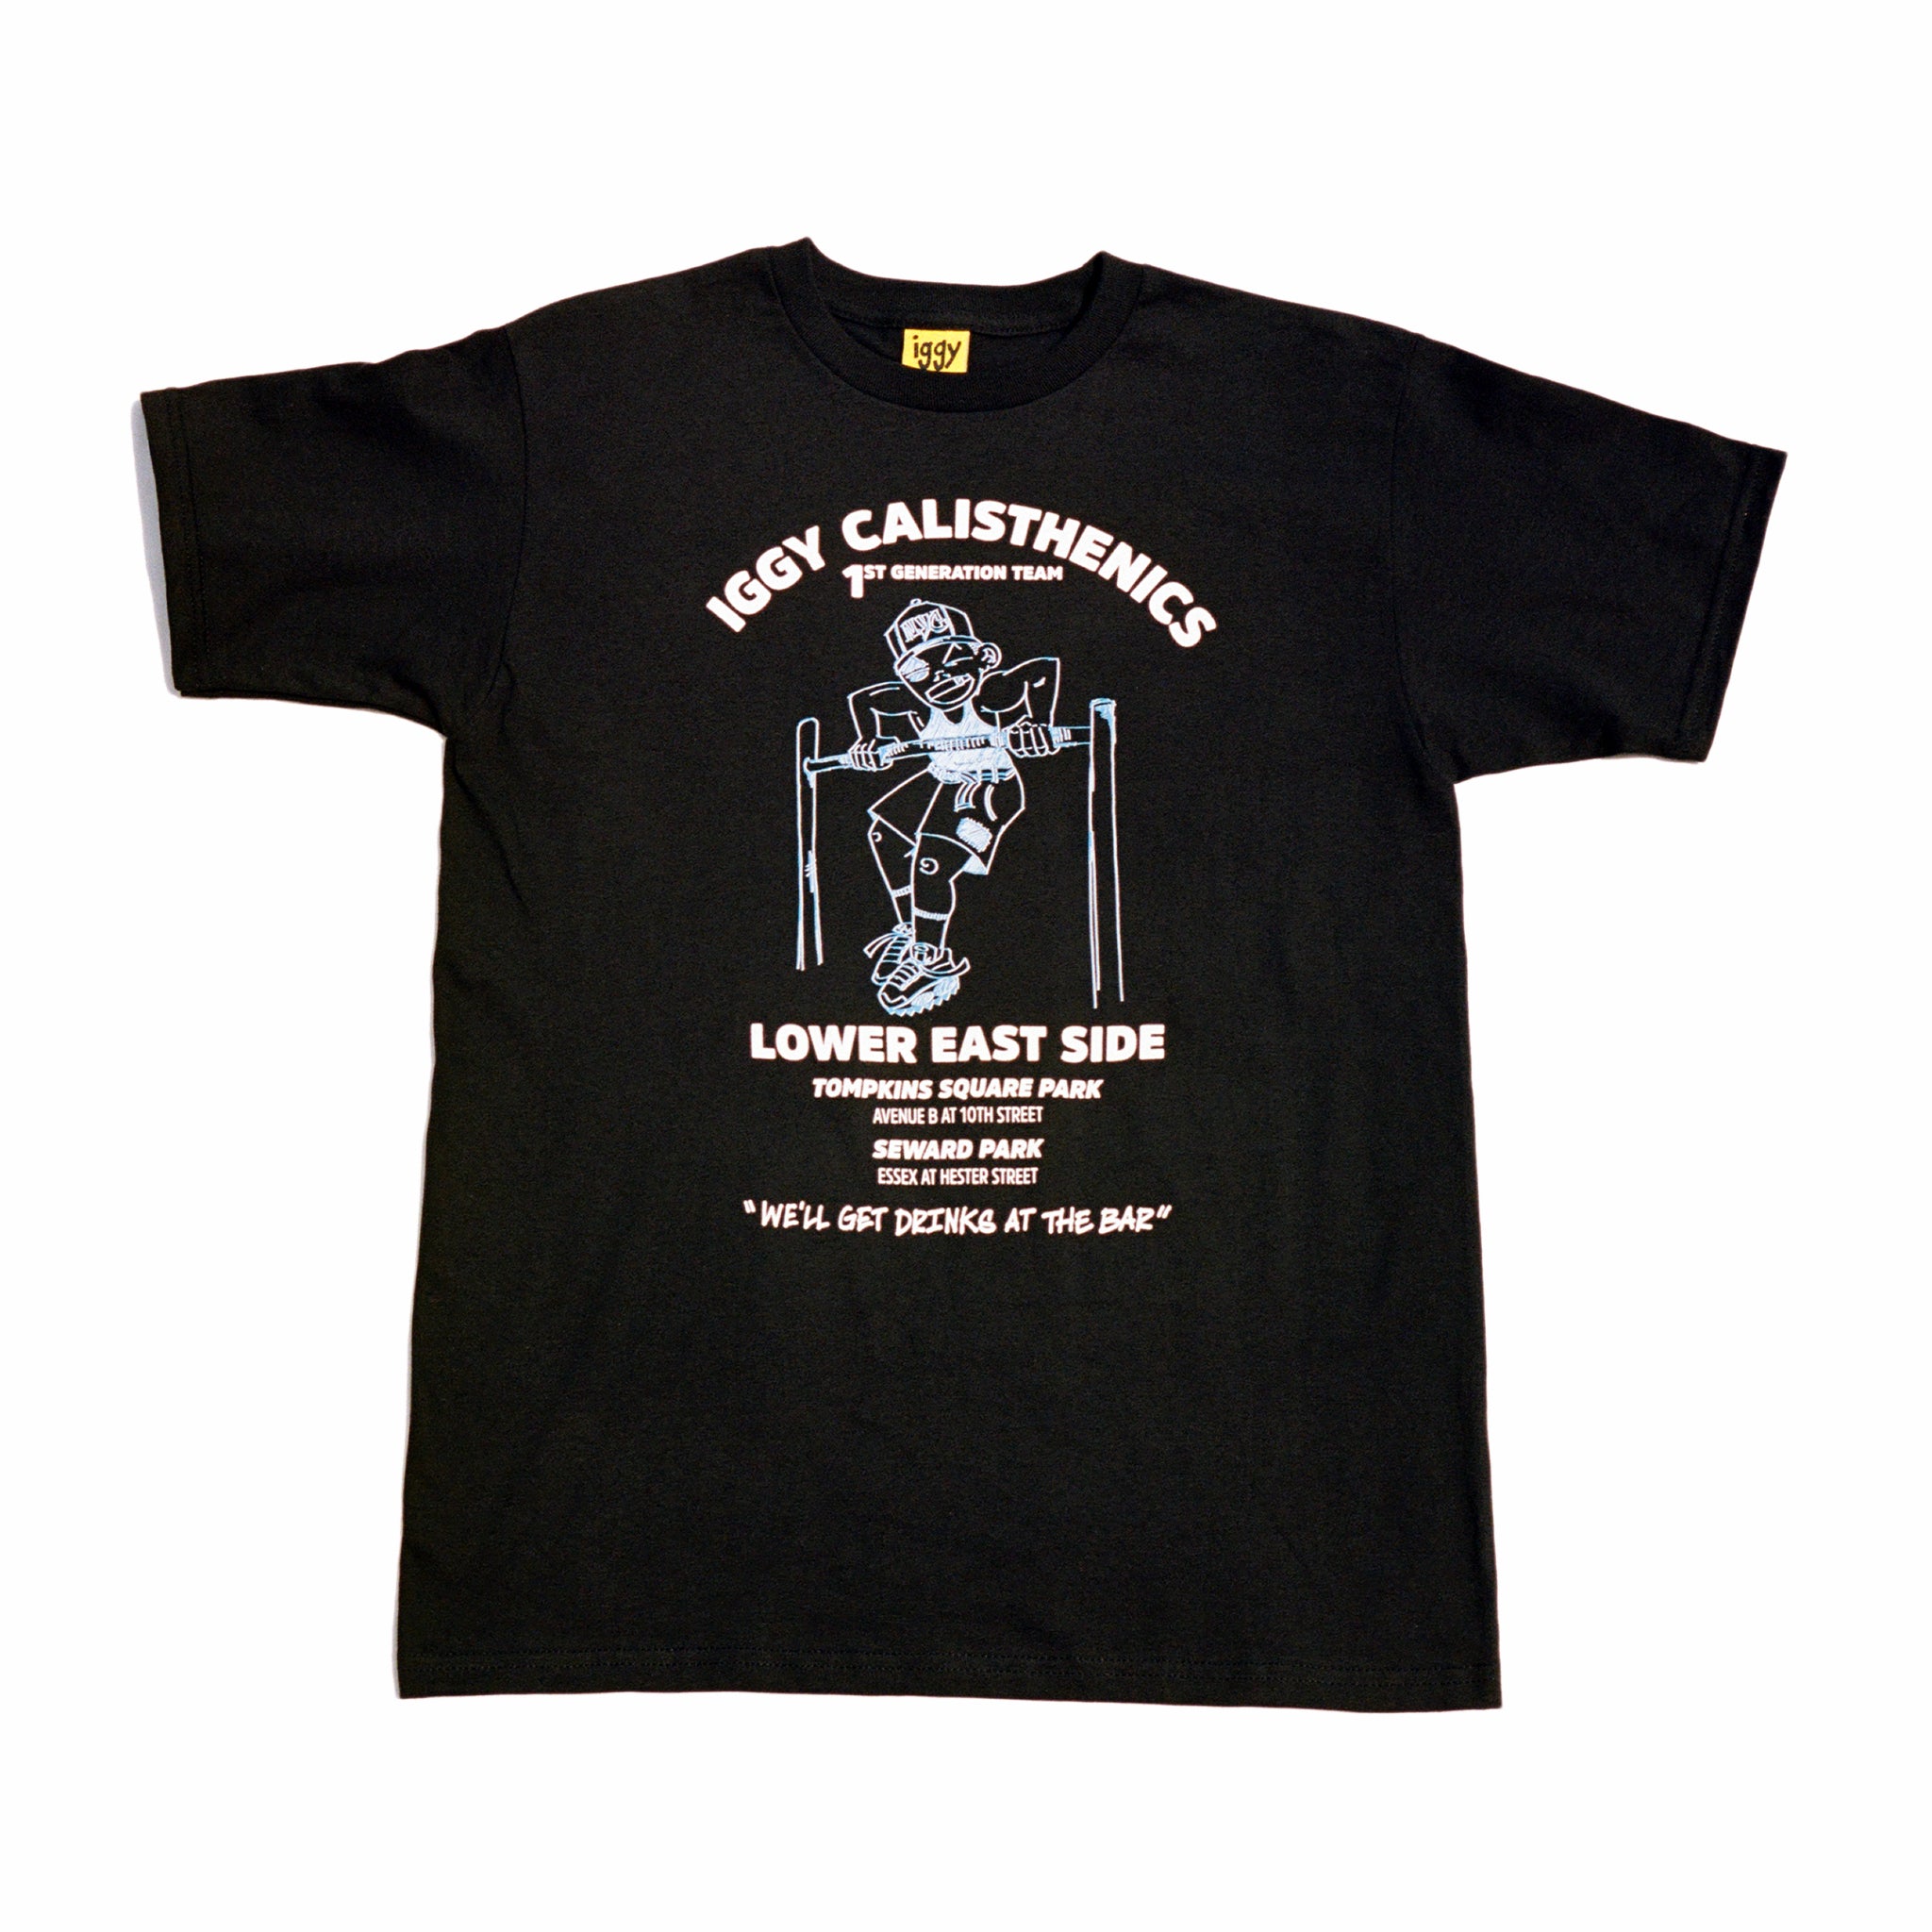 Iggy NYC Calisthenics Team T-Shirt (Black) - August Shop